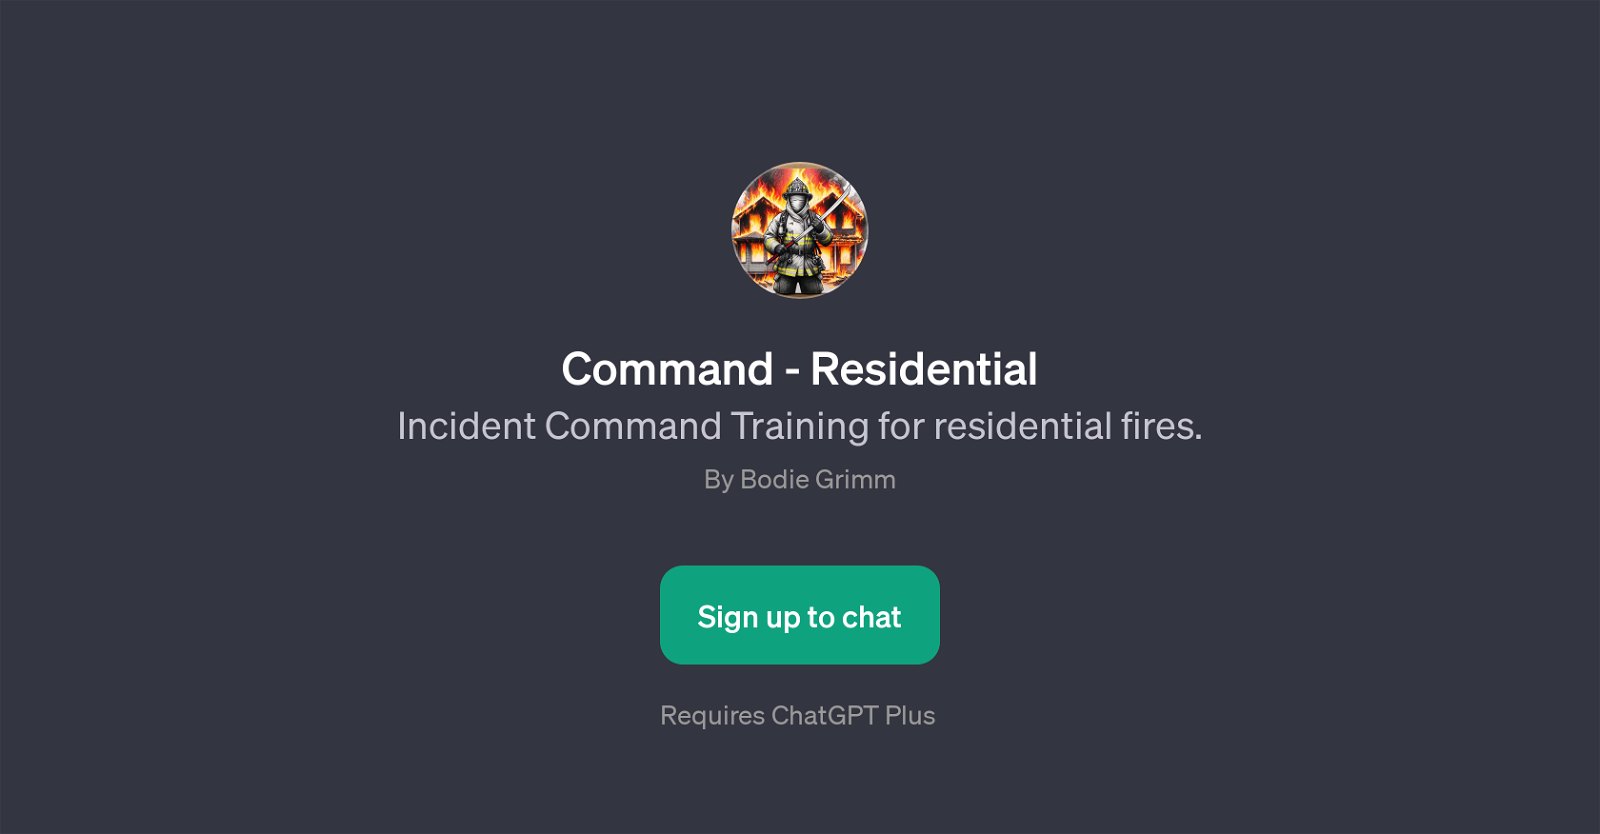 Command - Residential website